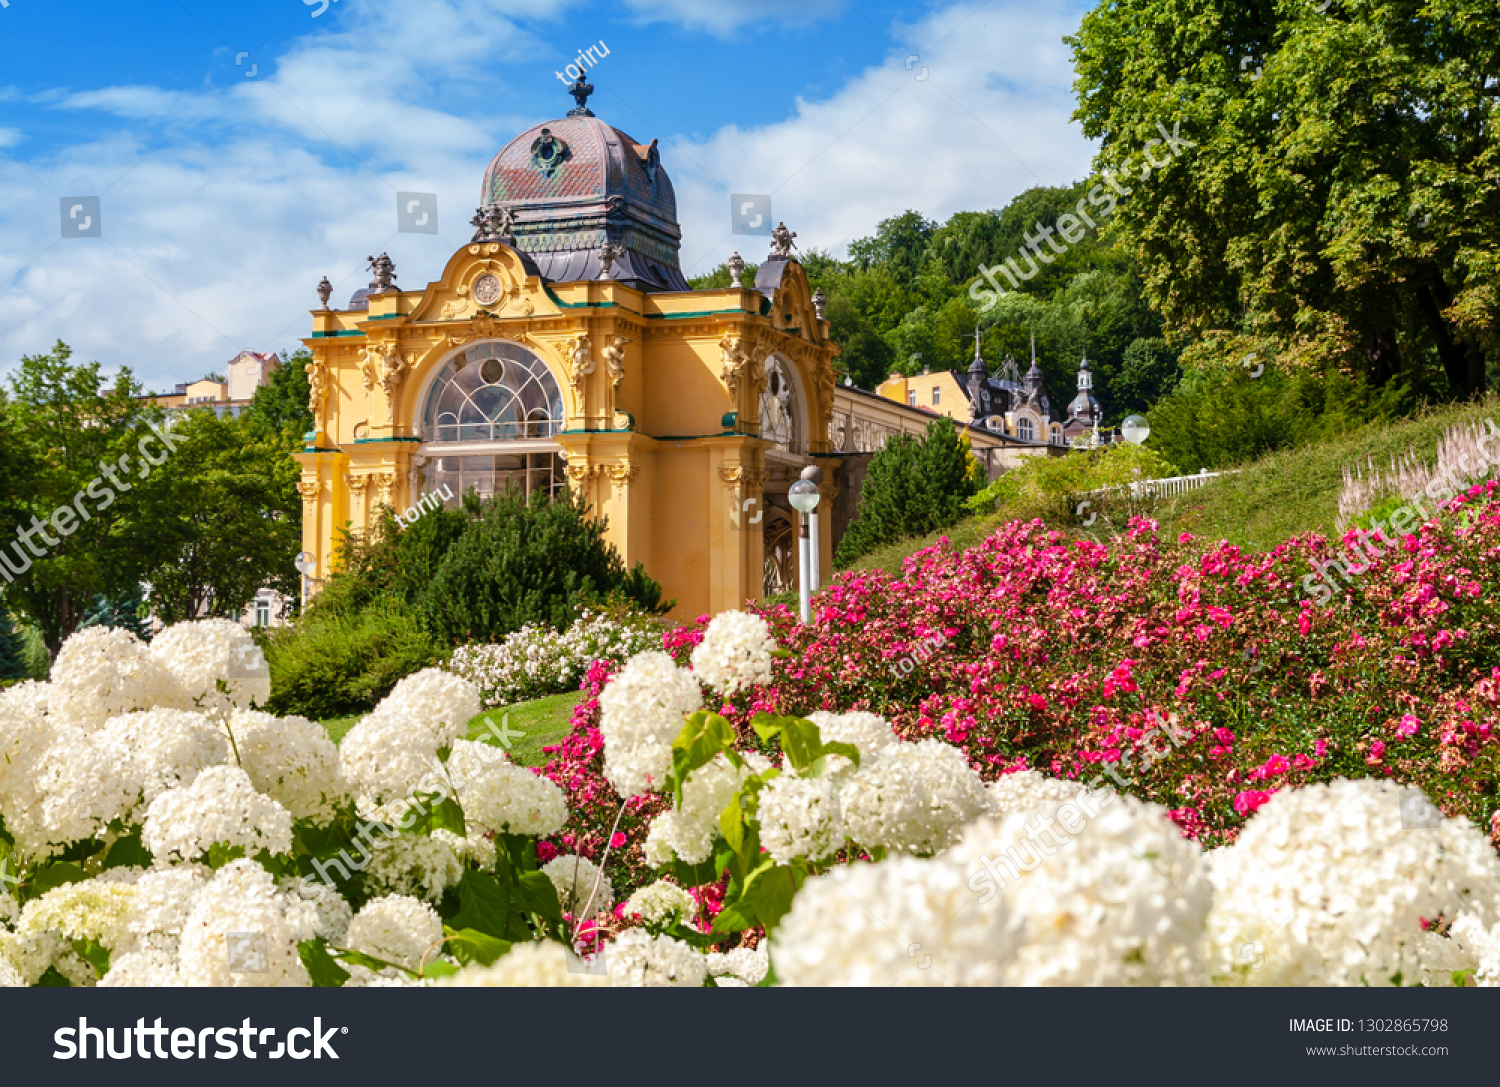 Romantic architecture of Bohemia. Marianske Lazne (Marienbad), Czech Republic #1302865798